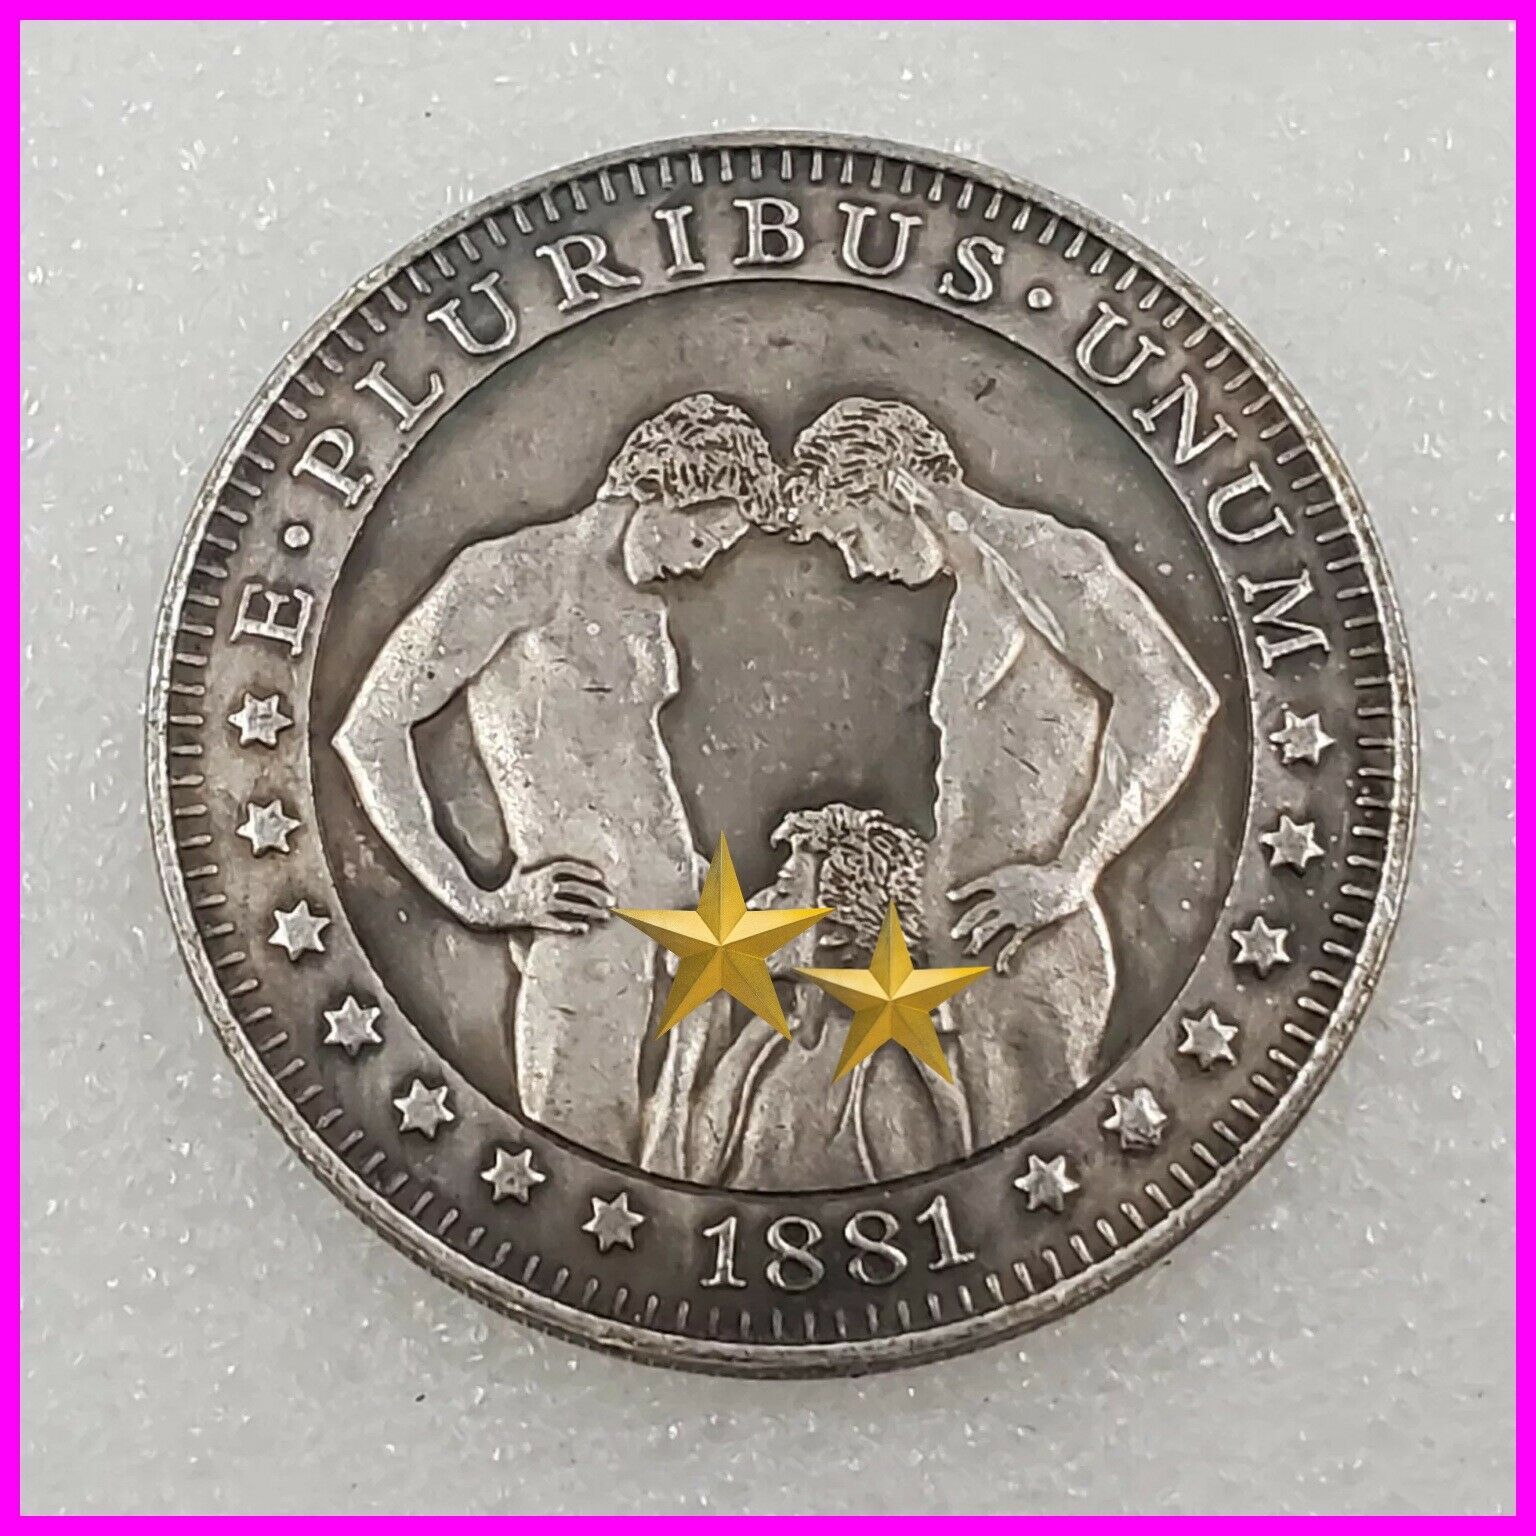 Sexy Girl Hobo Nickel Coin 1881 Commemorative Free Shipping 106 Hobo Nickels